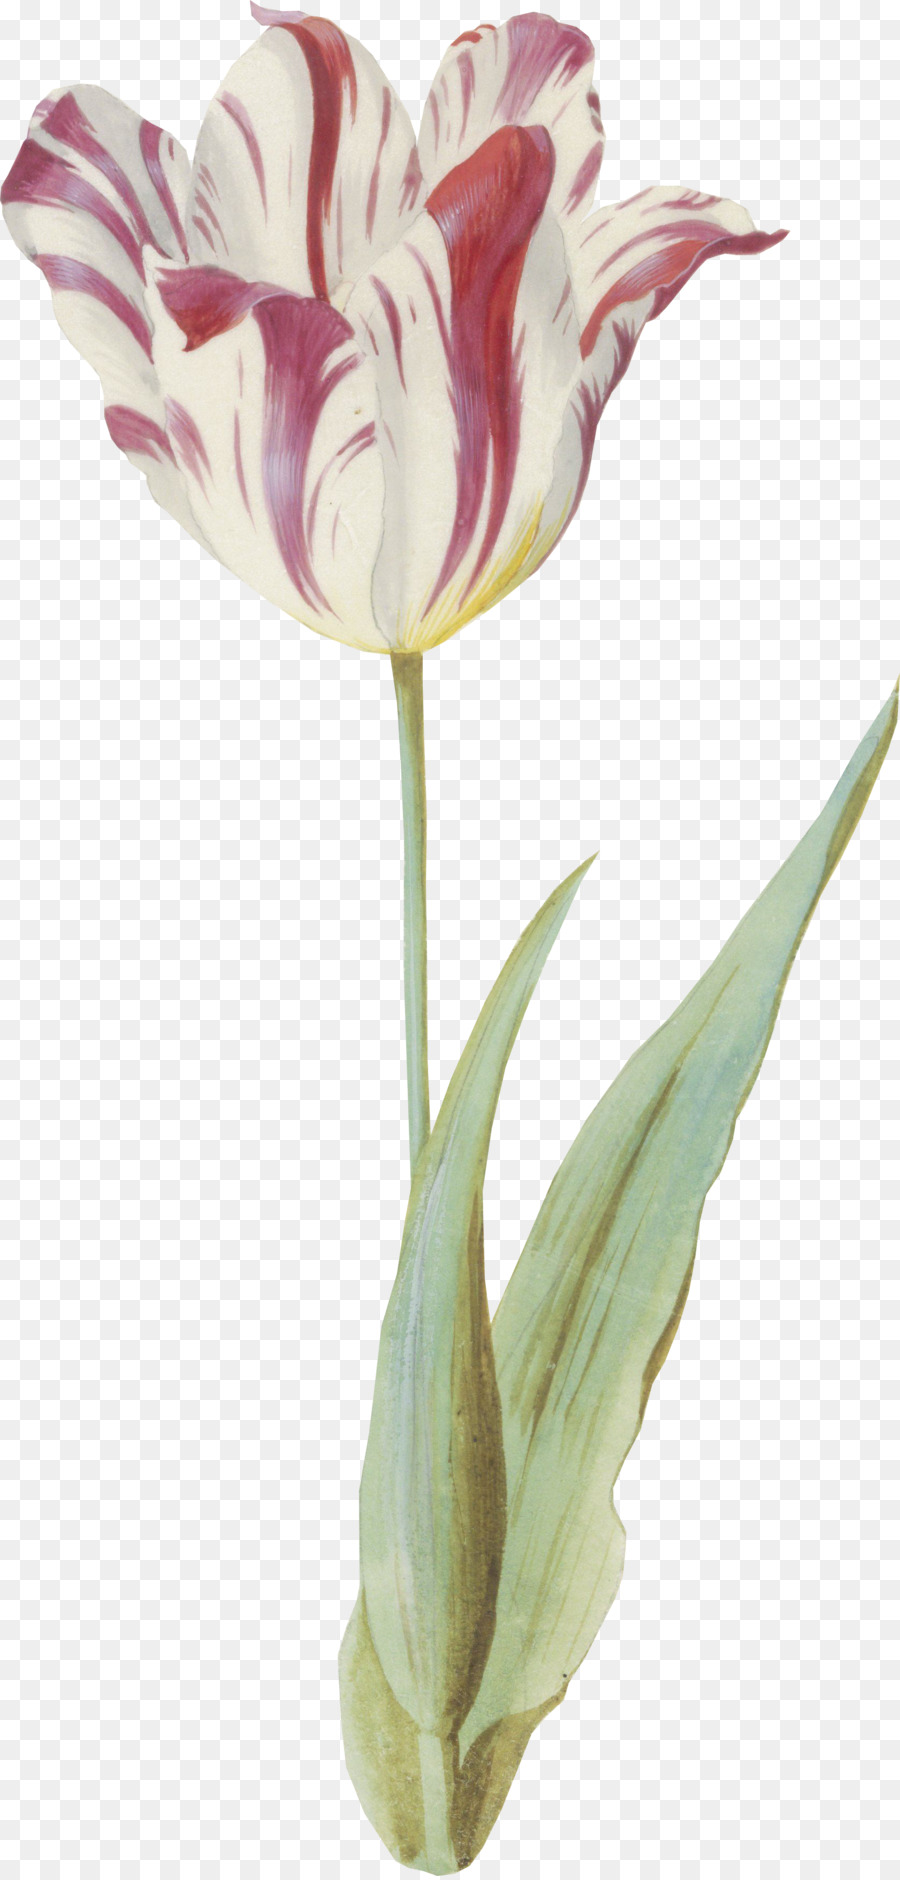 Tulip fiori recisi Vaso, Pianta, stelo, Petalo - Tulipano